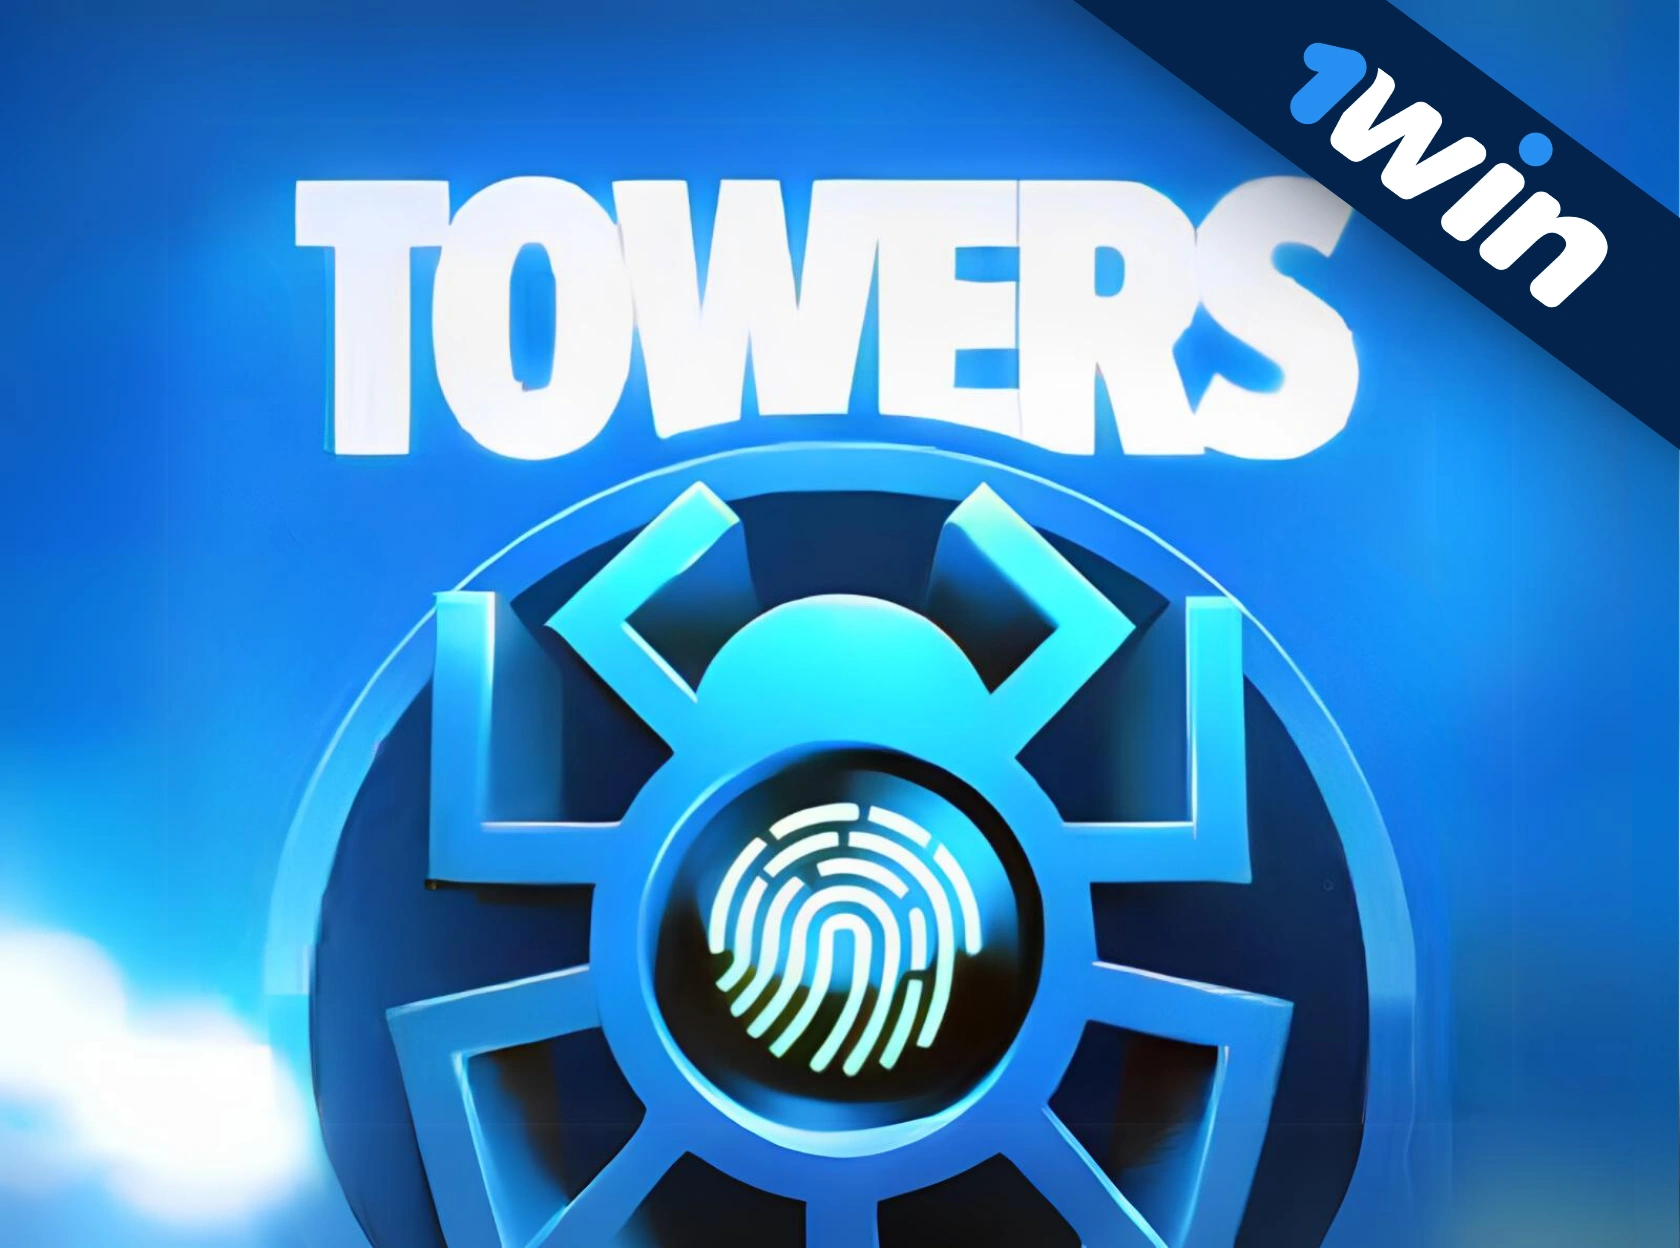 Towers 1win - नया विशेष गेम!